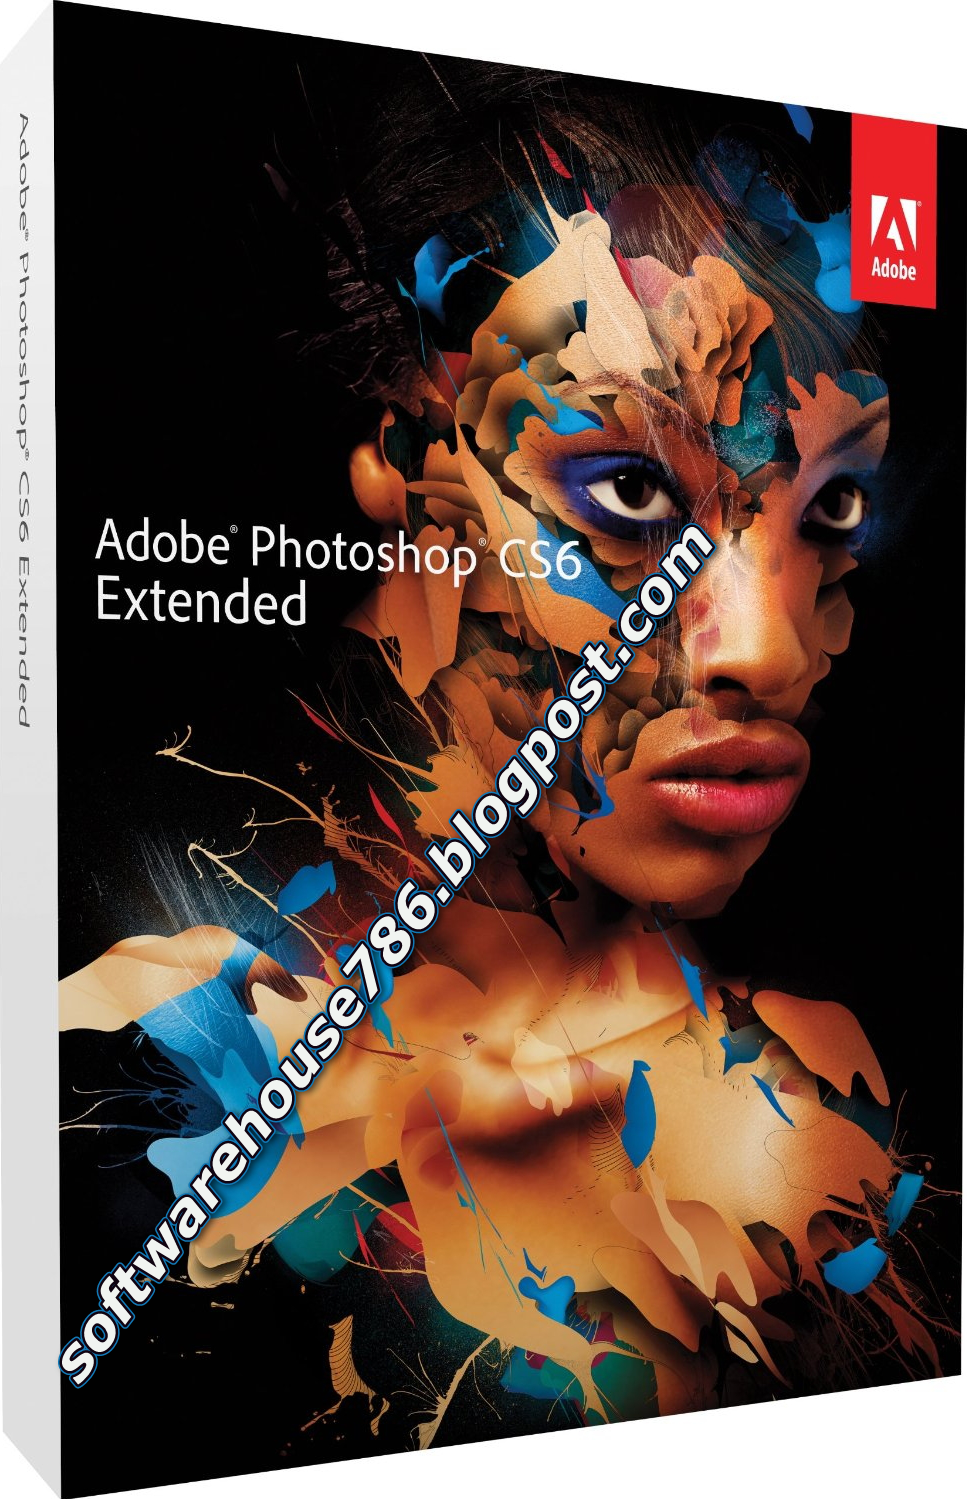 Adobe photoshop cs6 extended keygen download download vmware workstation pro latest full version